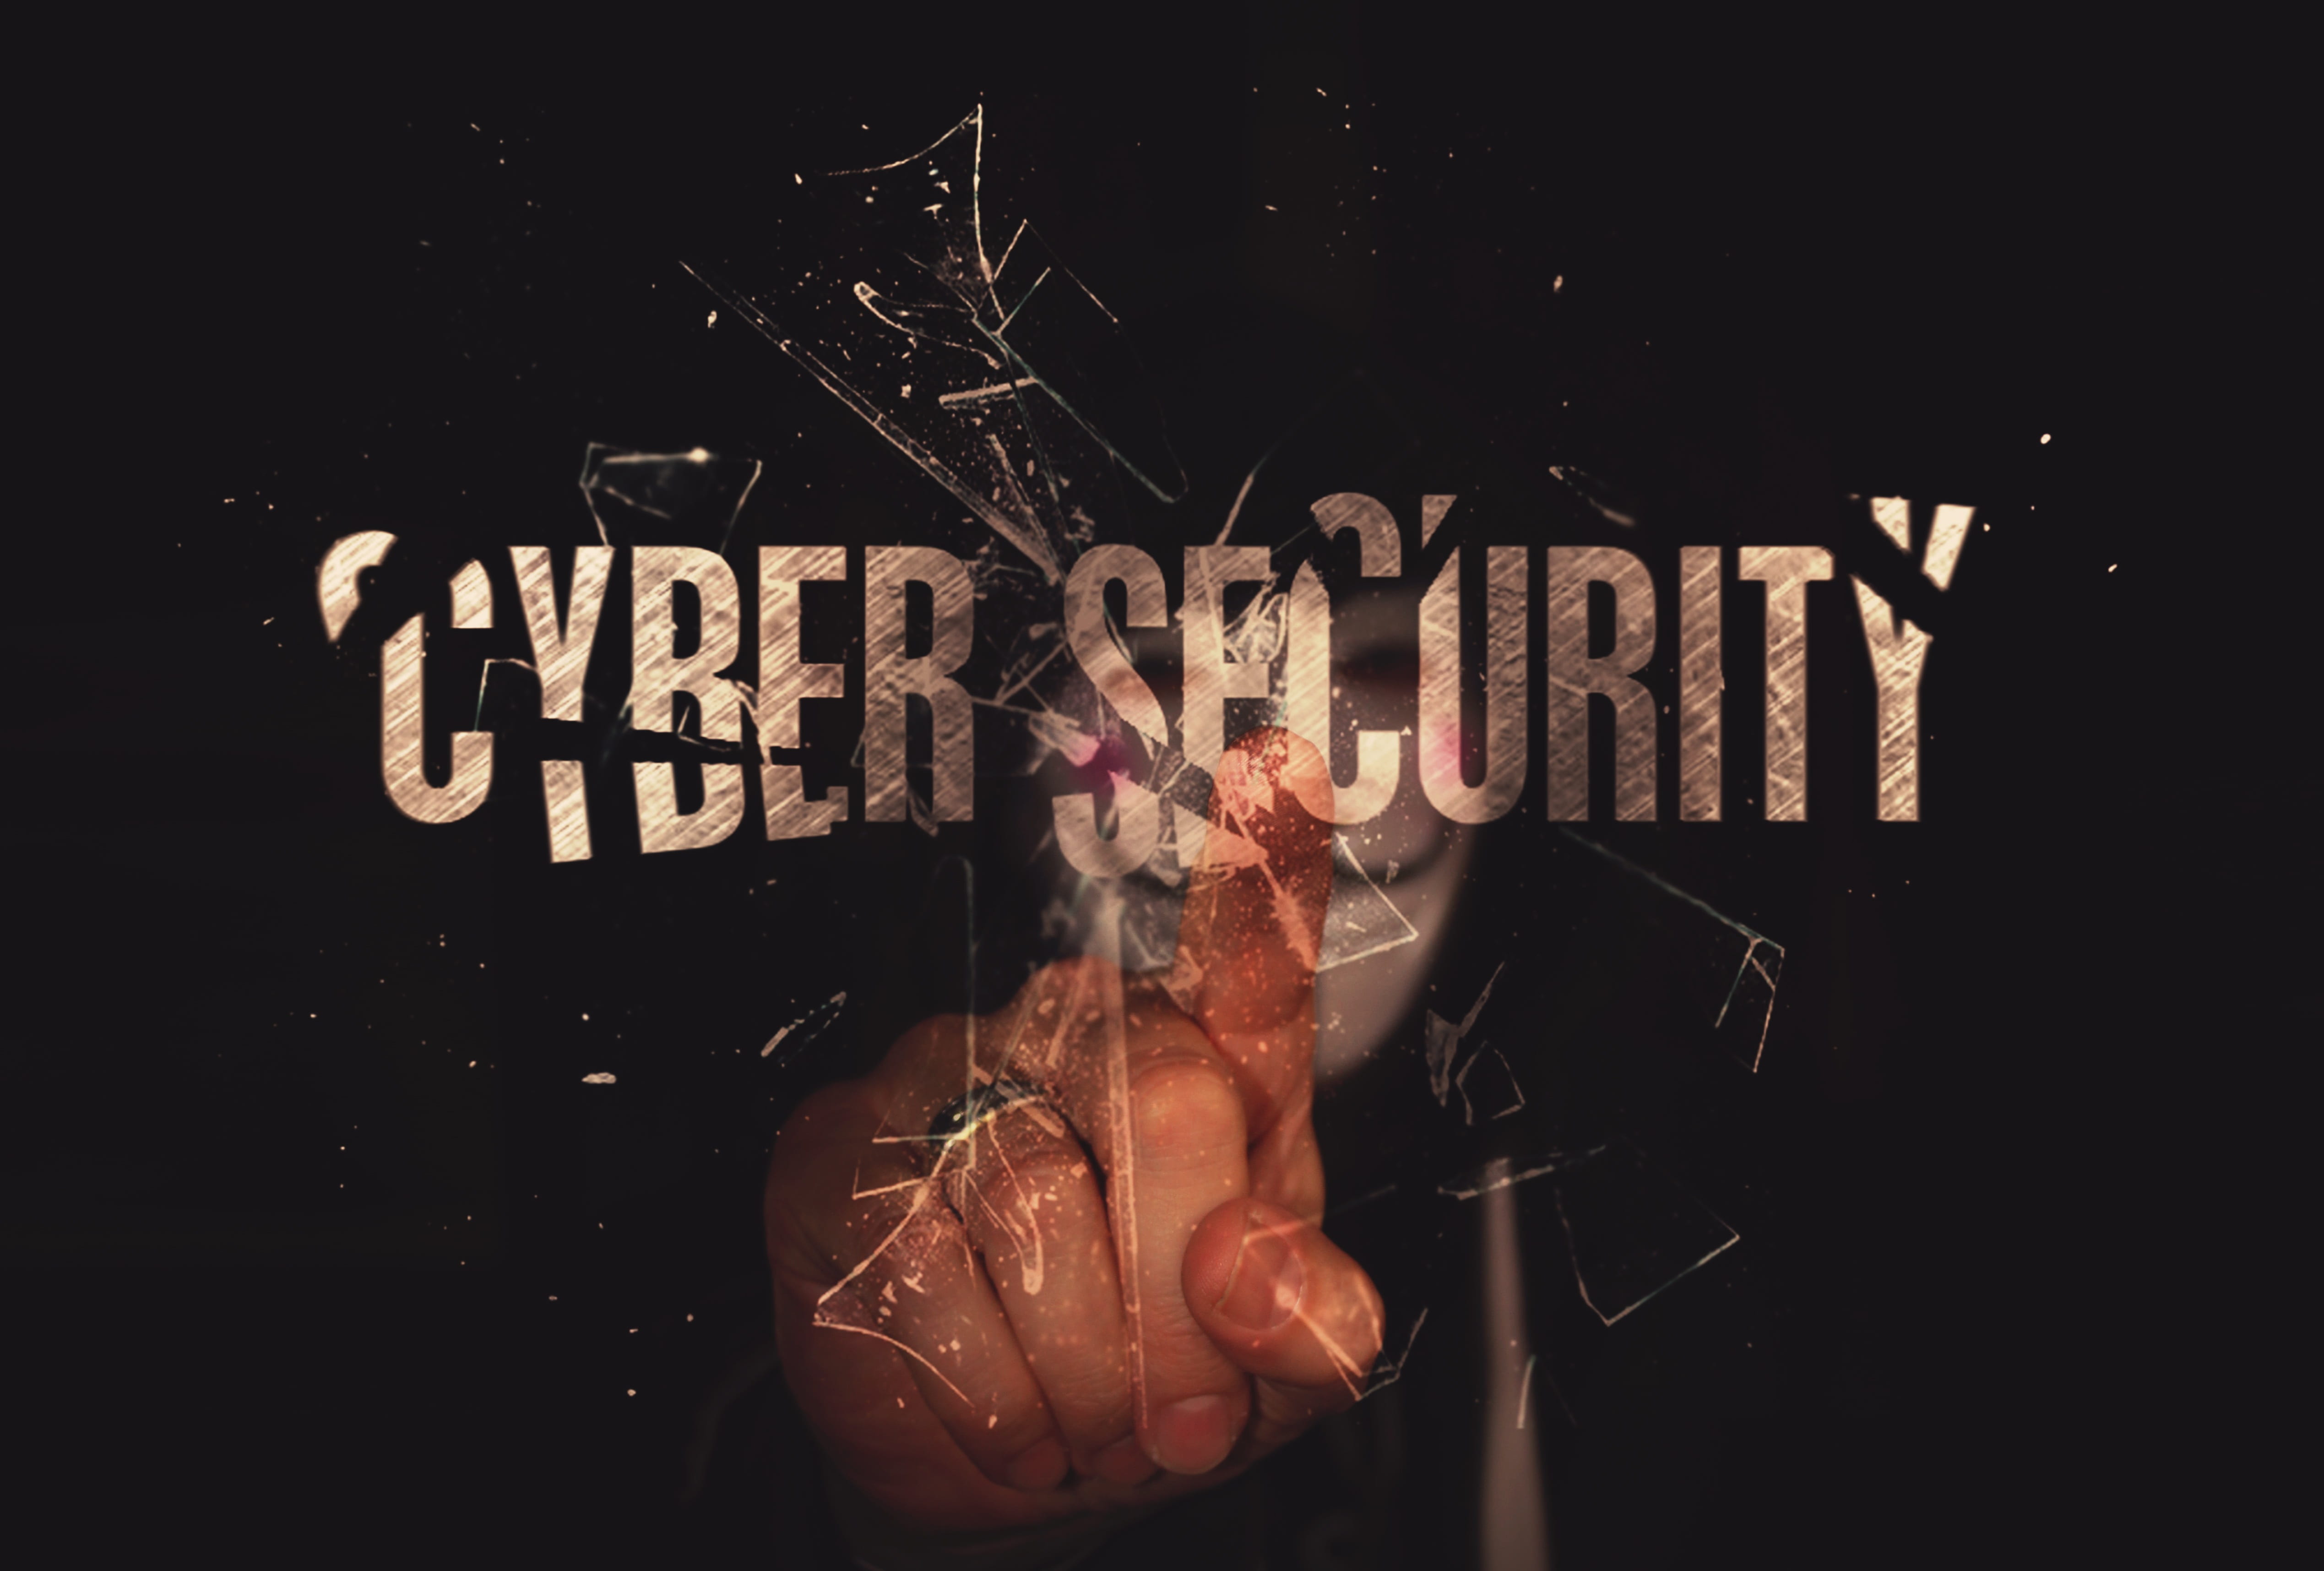 Cyber Security digital wallpaper, internet security, hacking